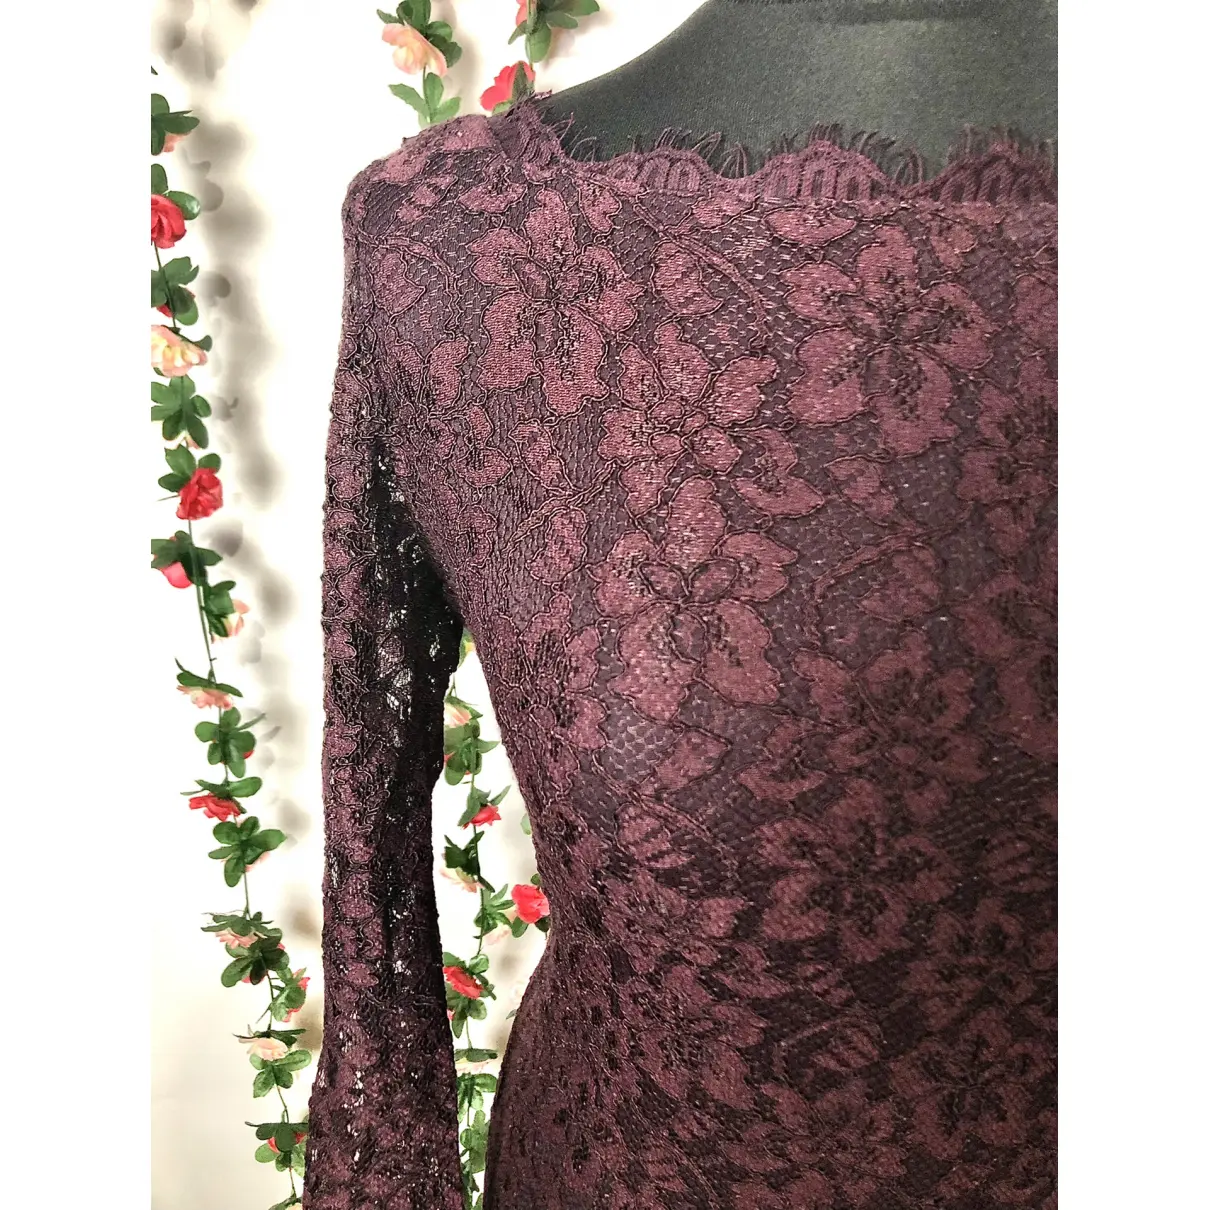 Lace mid-length dress Diane Von Furstenberg